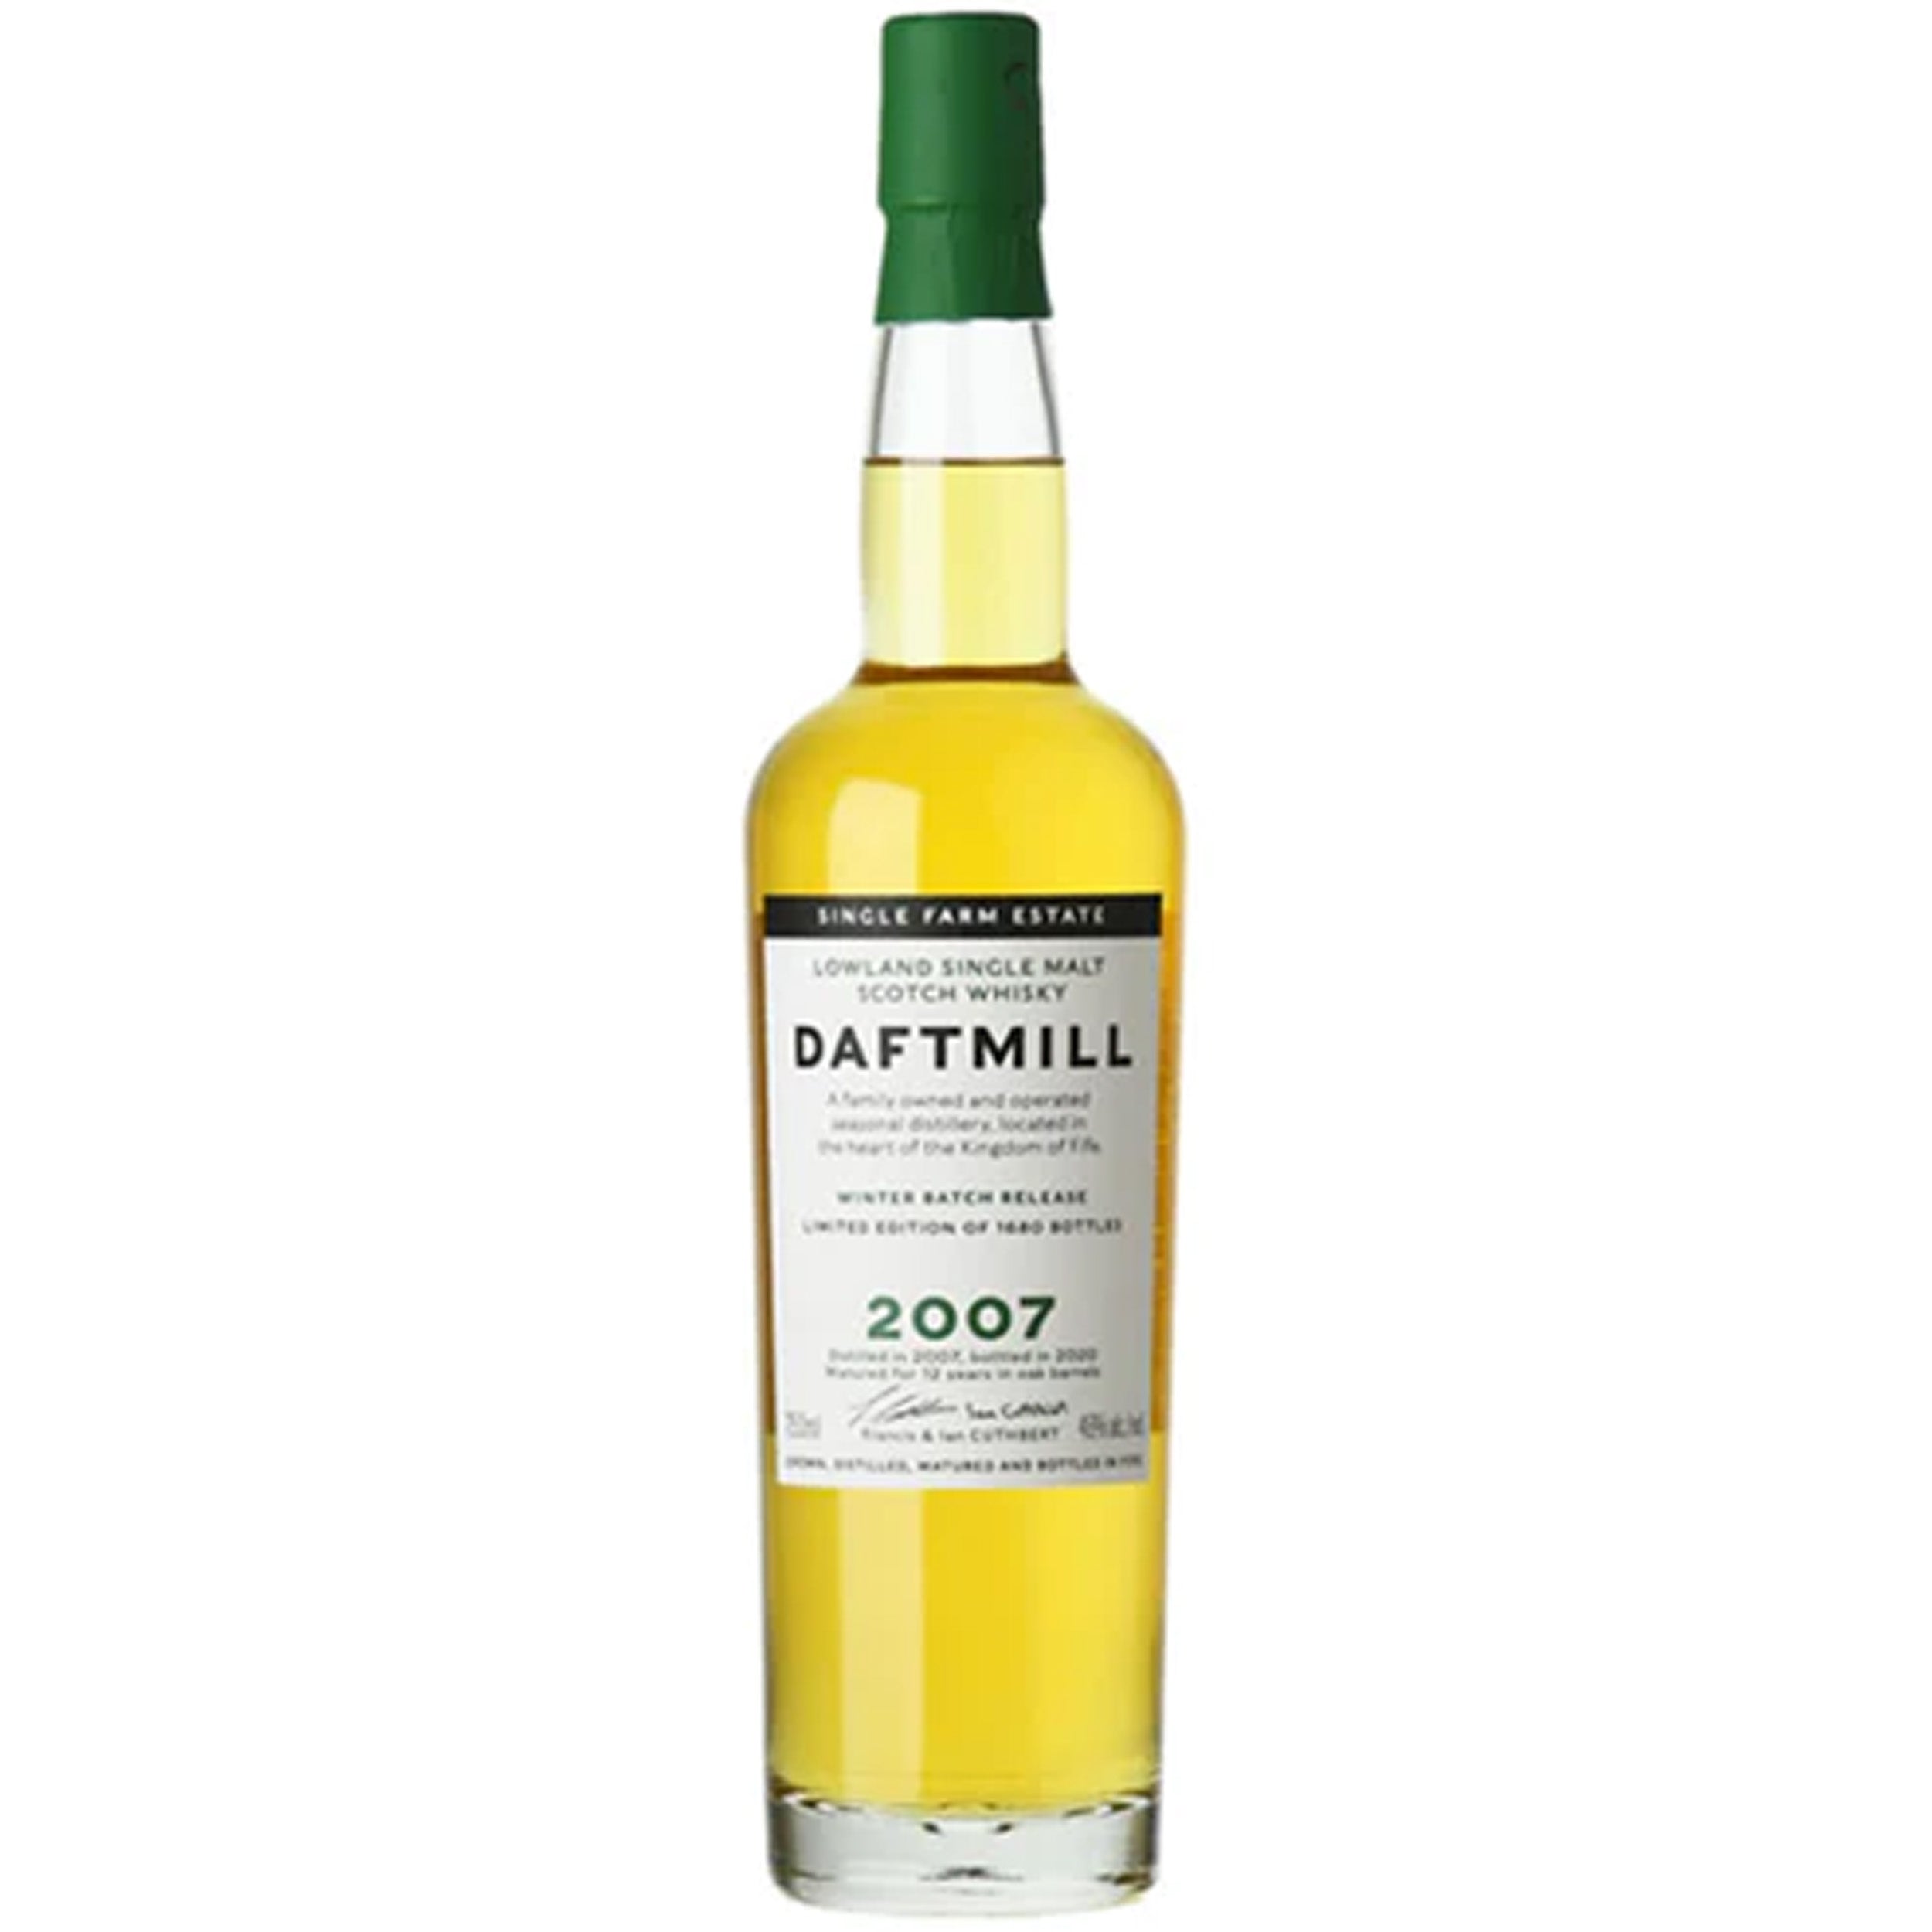 Daftmill Single Farm Estate Scotch Whisky Winter Release 2007